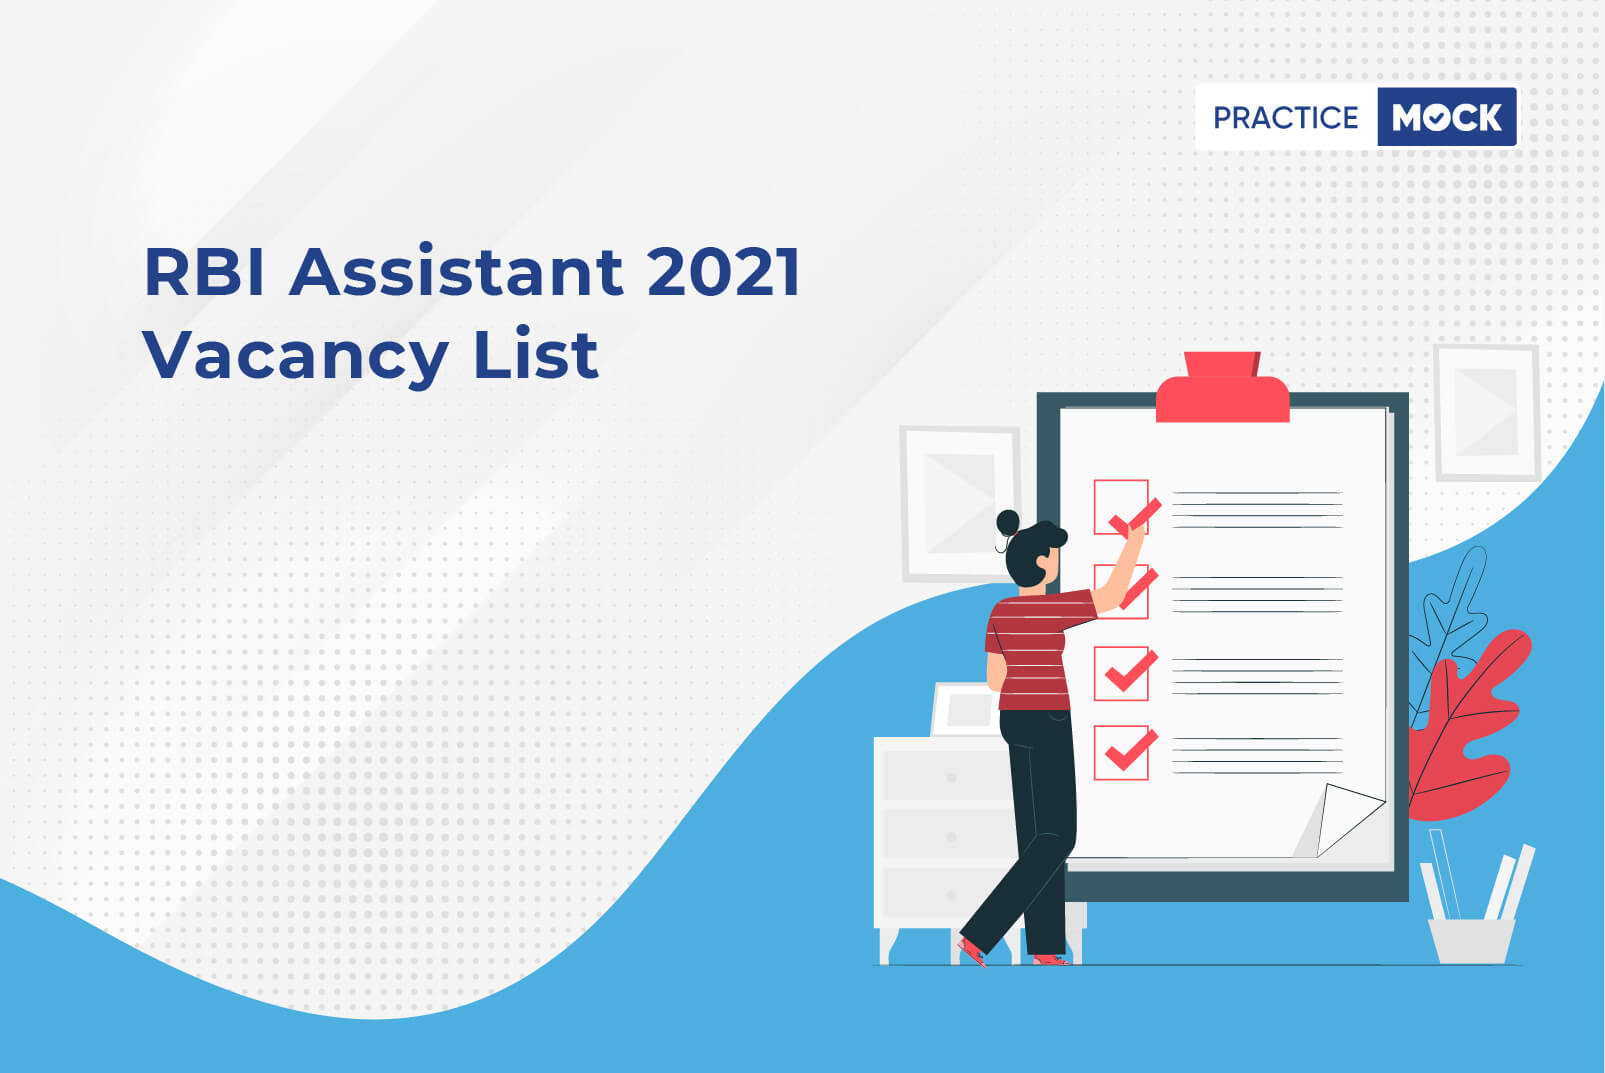 RBI Assistant Vacancy List 2021